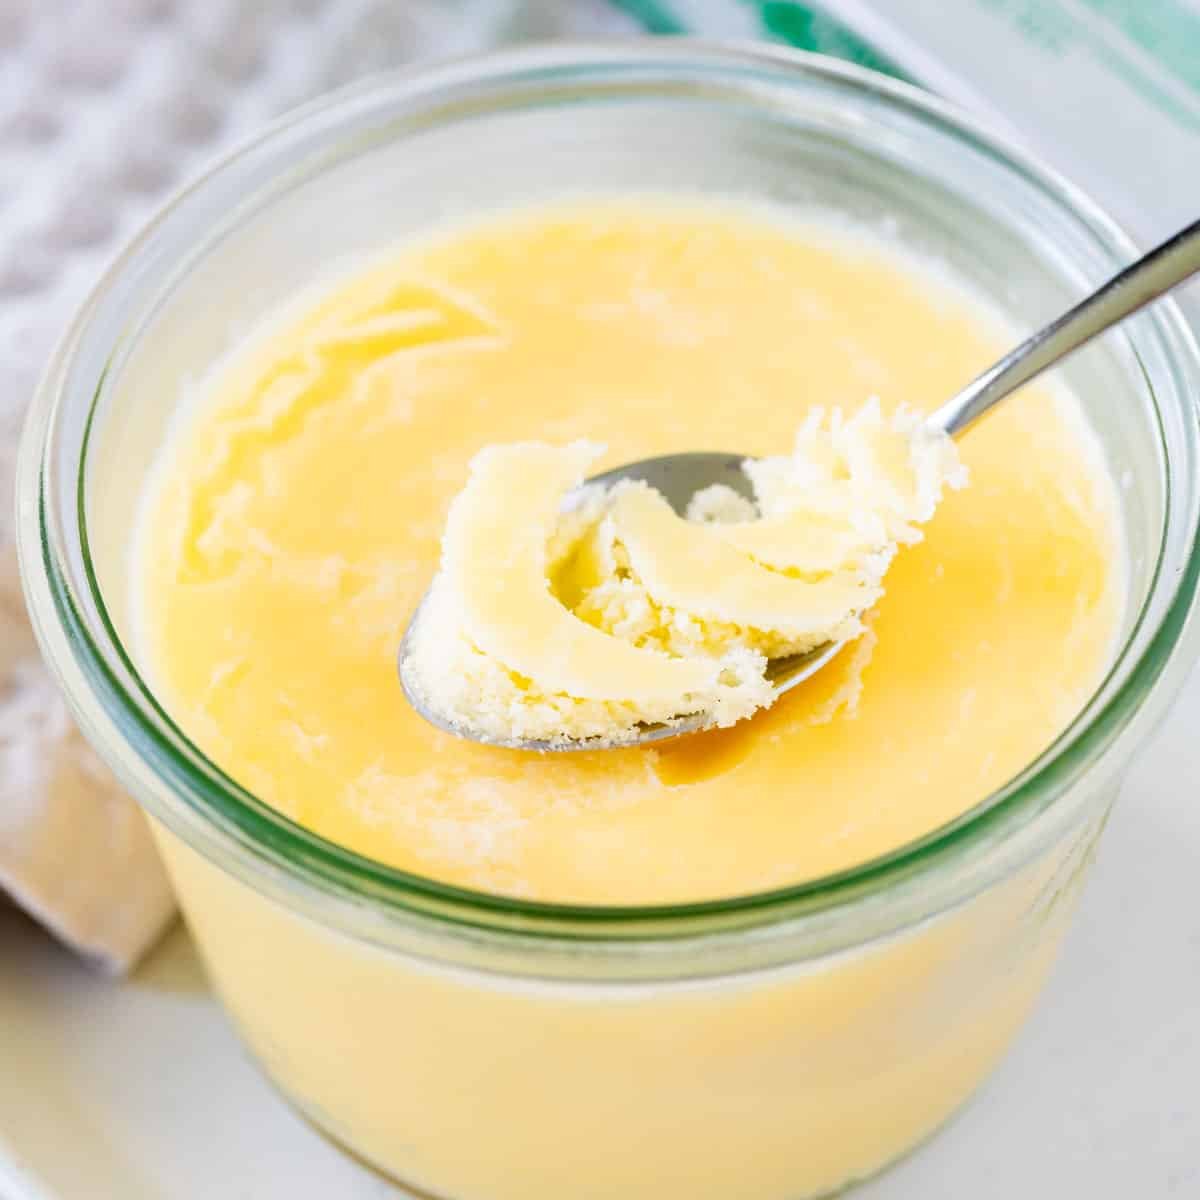 https://platedcravings.com/wp-content/uploads/2019/09/Clarified-Butter-Recipe-Plated-Cravings-hero.jpg